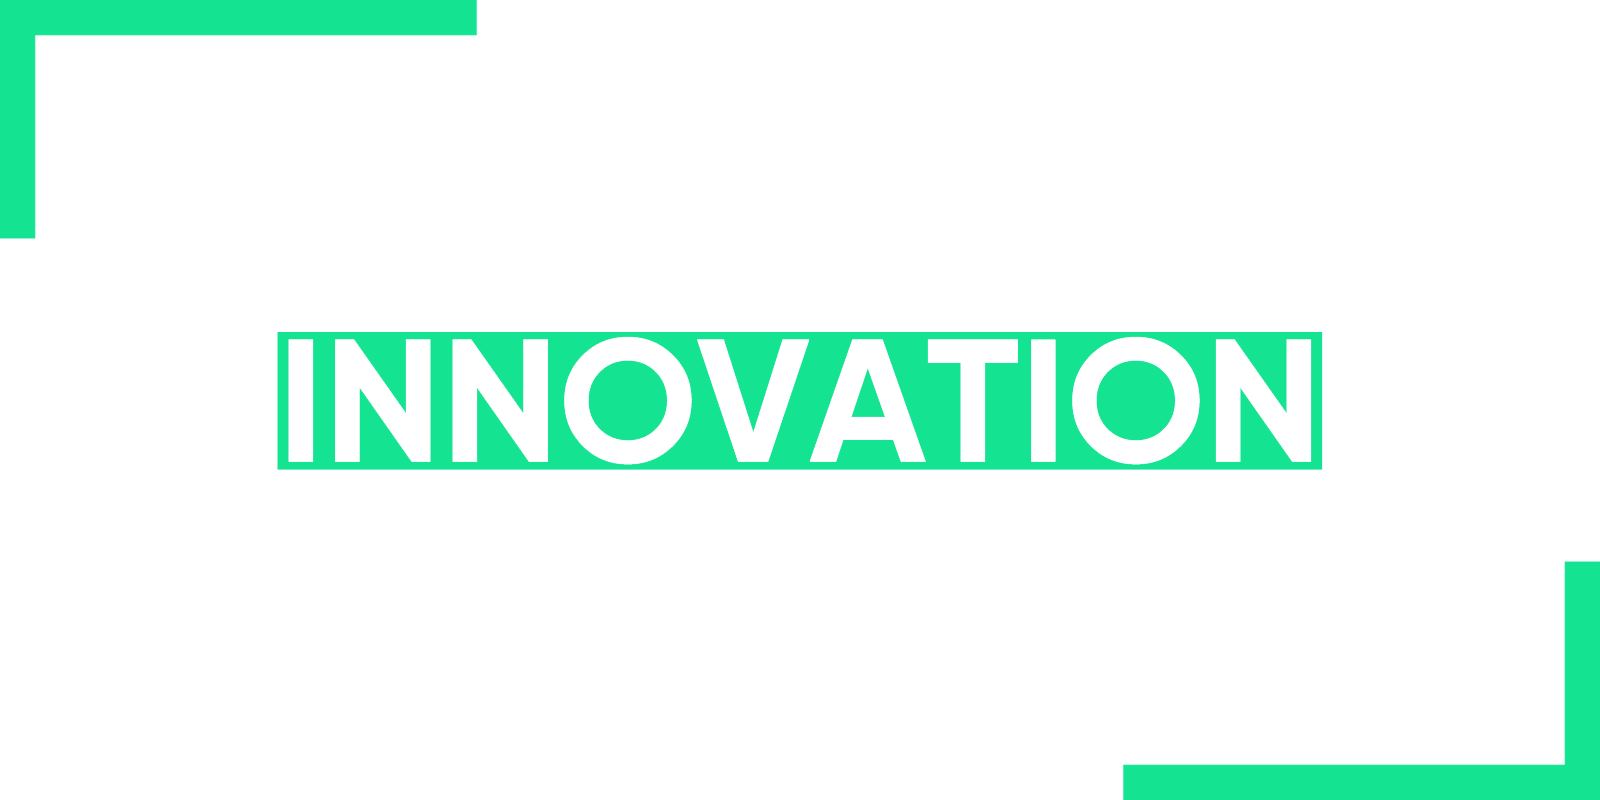 Awards | WorldFestival